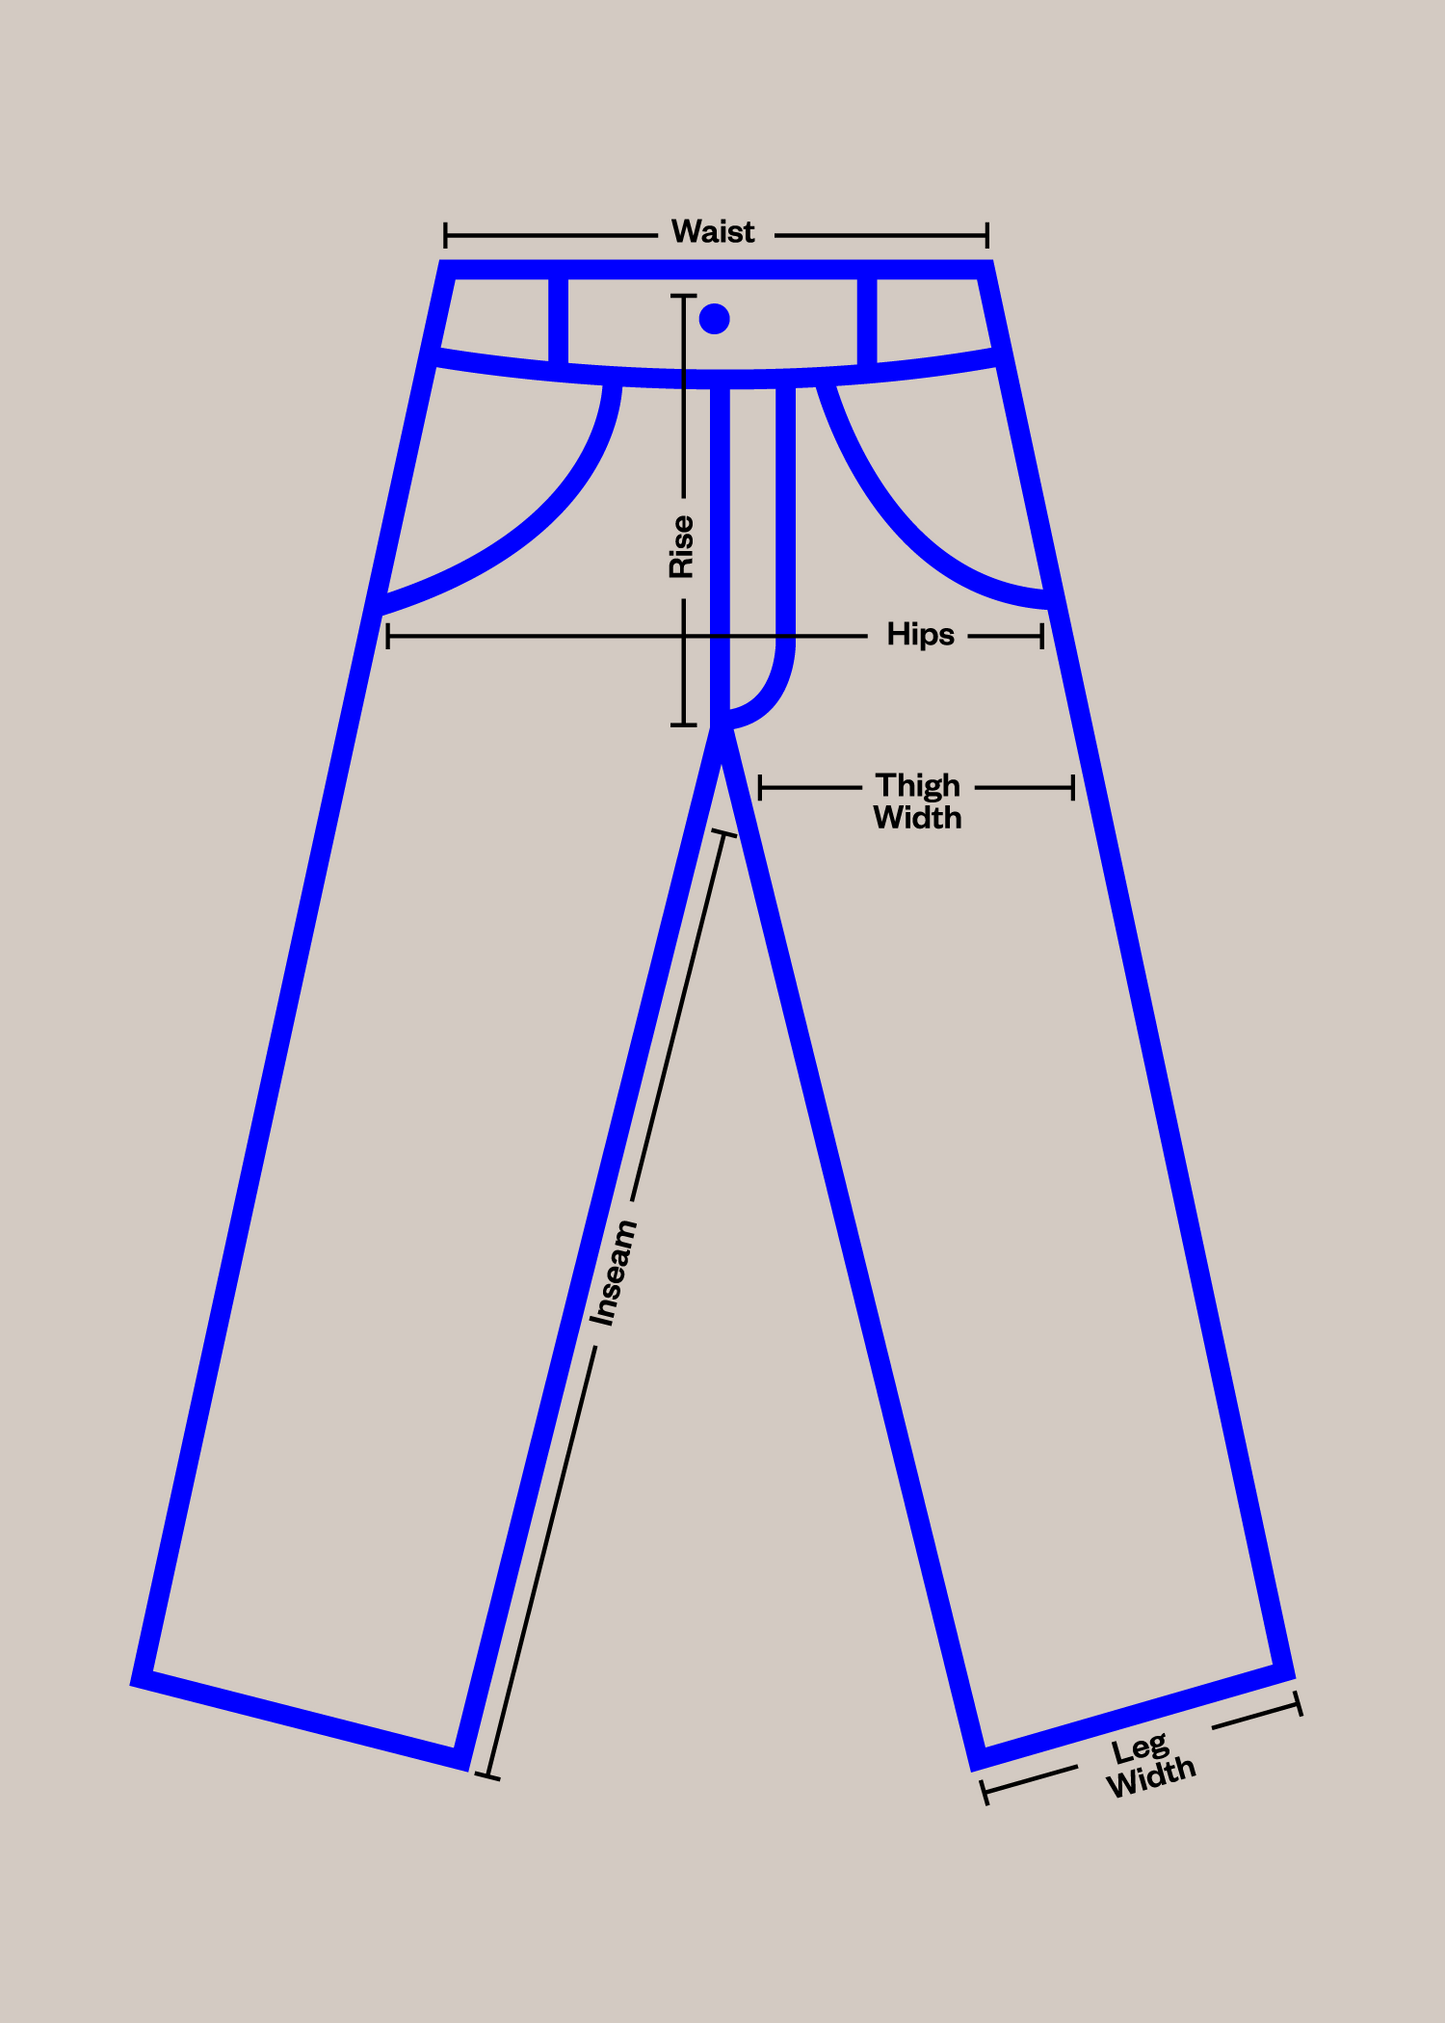 1987 Cerizay HBT French Military Cargo Pants Size Women's 28 Men's 31